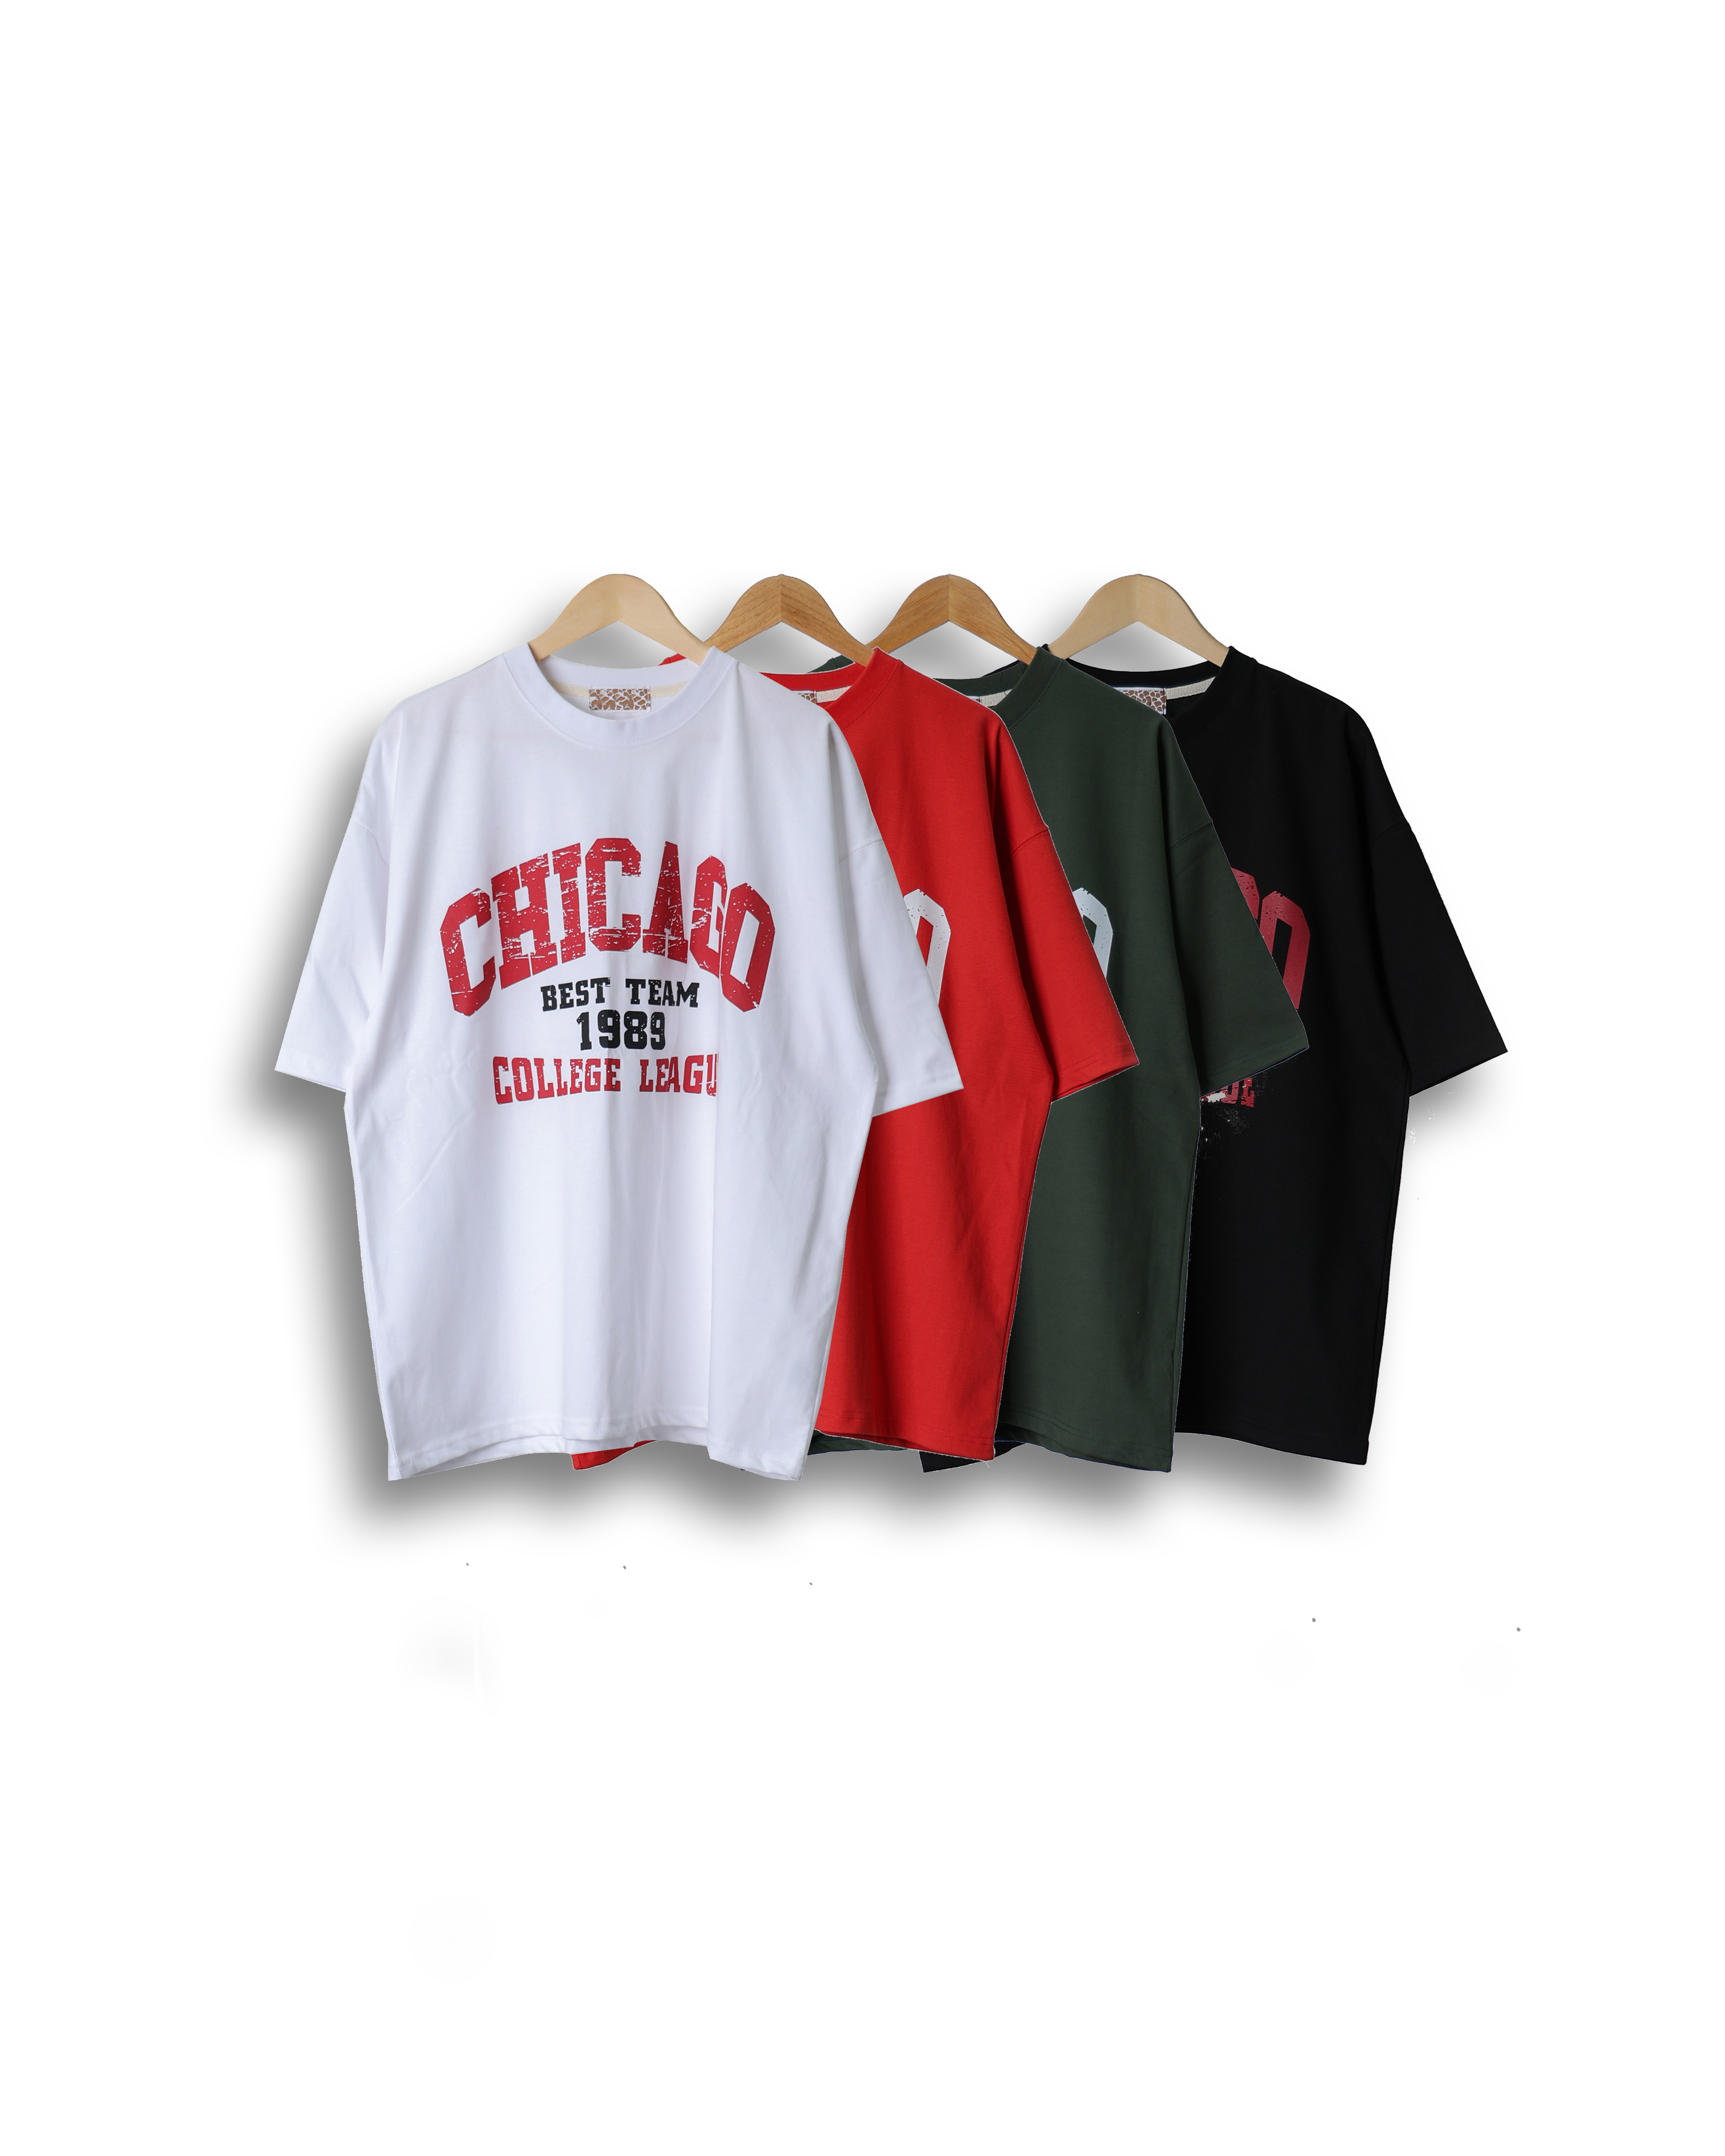 KIRRI CHICAGO Printed Over T Shirts. (Black/Green/Red/White)